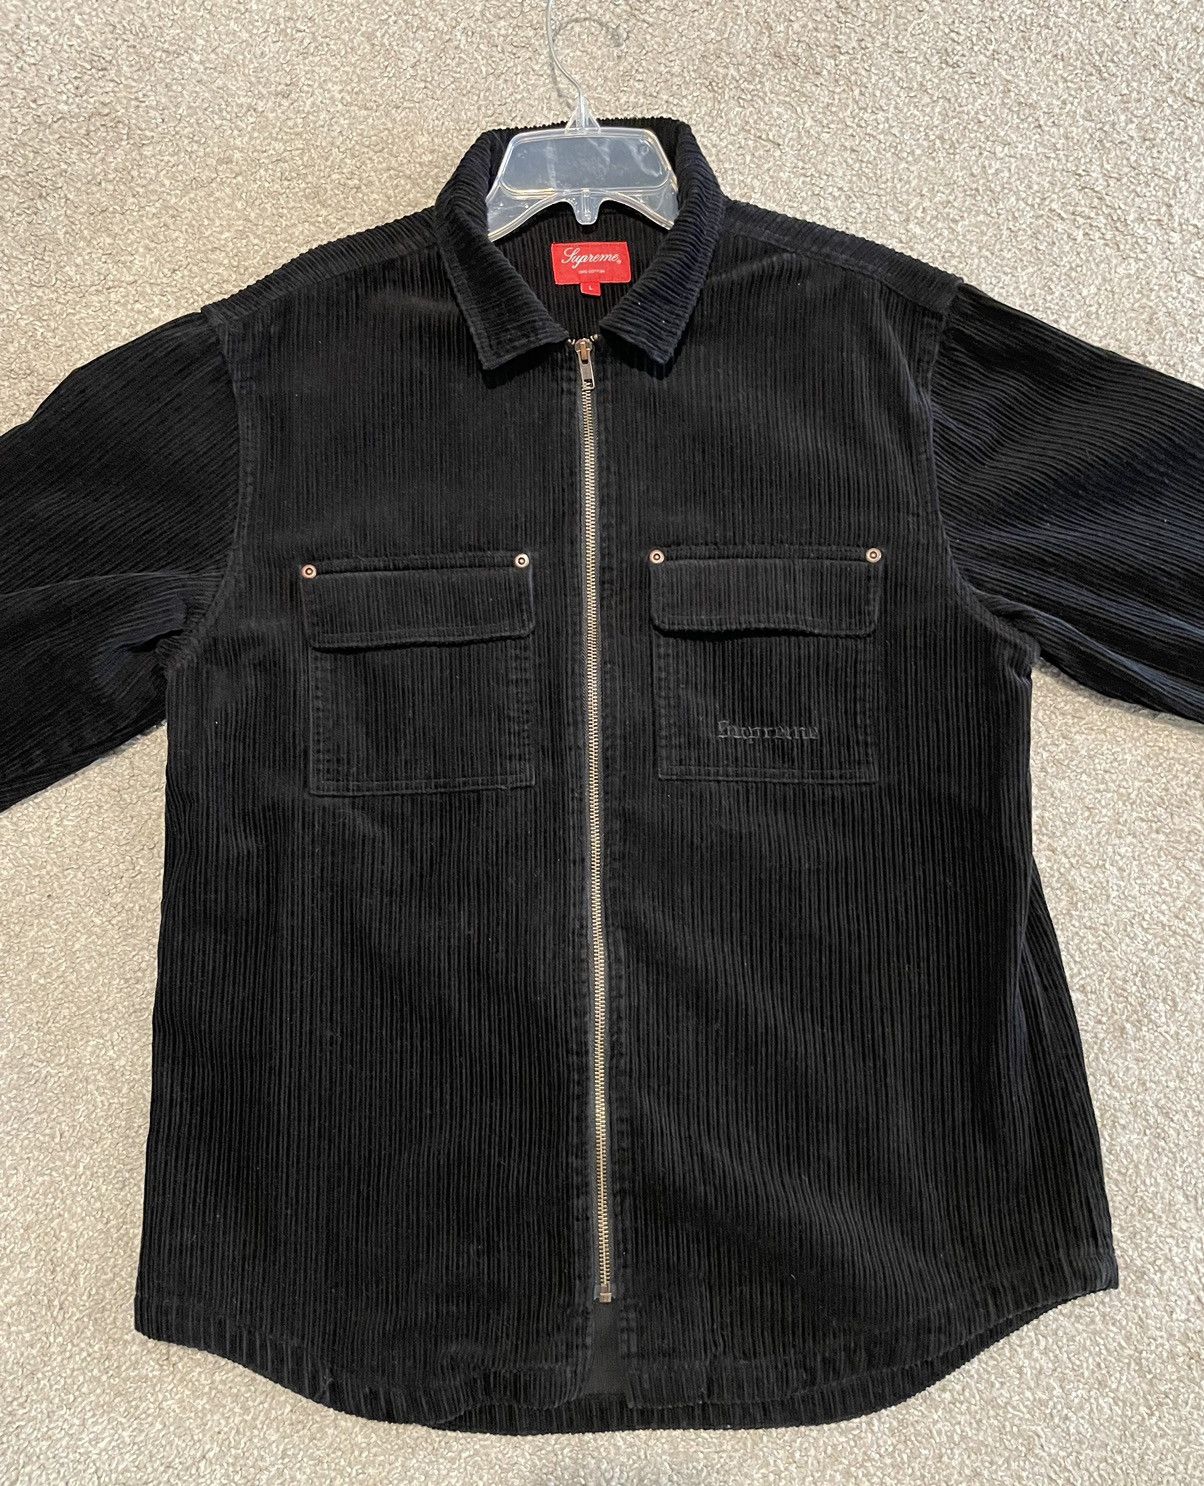 Supreme Supreme Corduroy Zip Up Shirt Black | Grailed